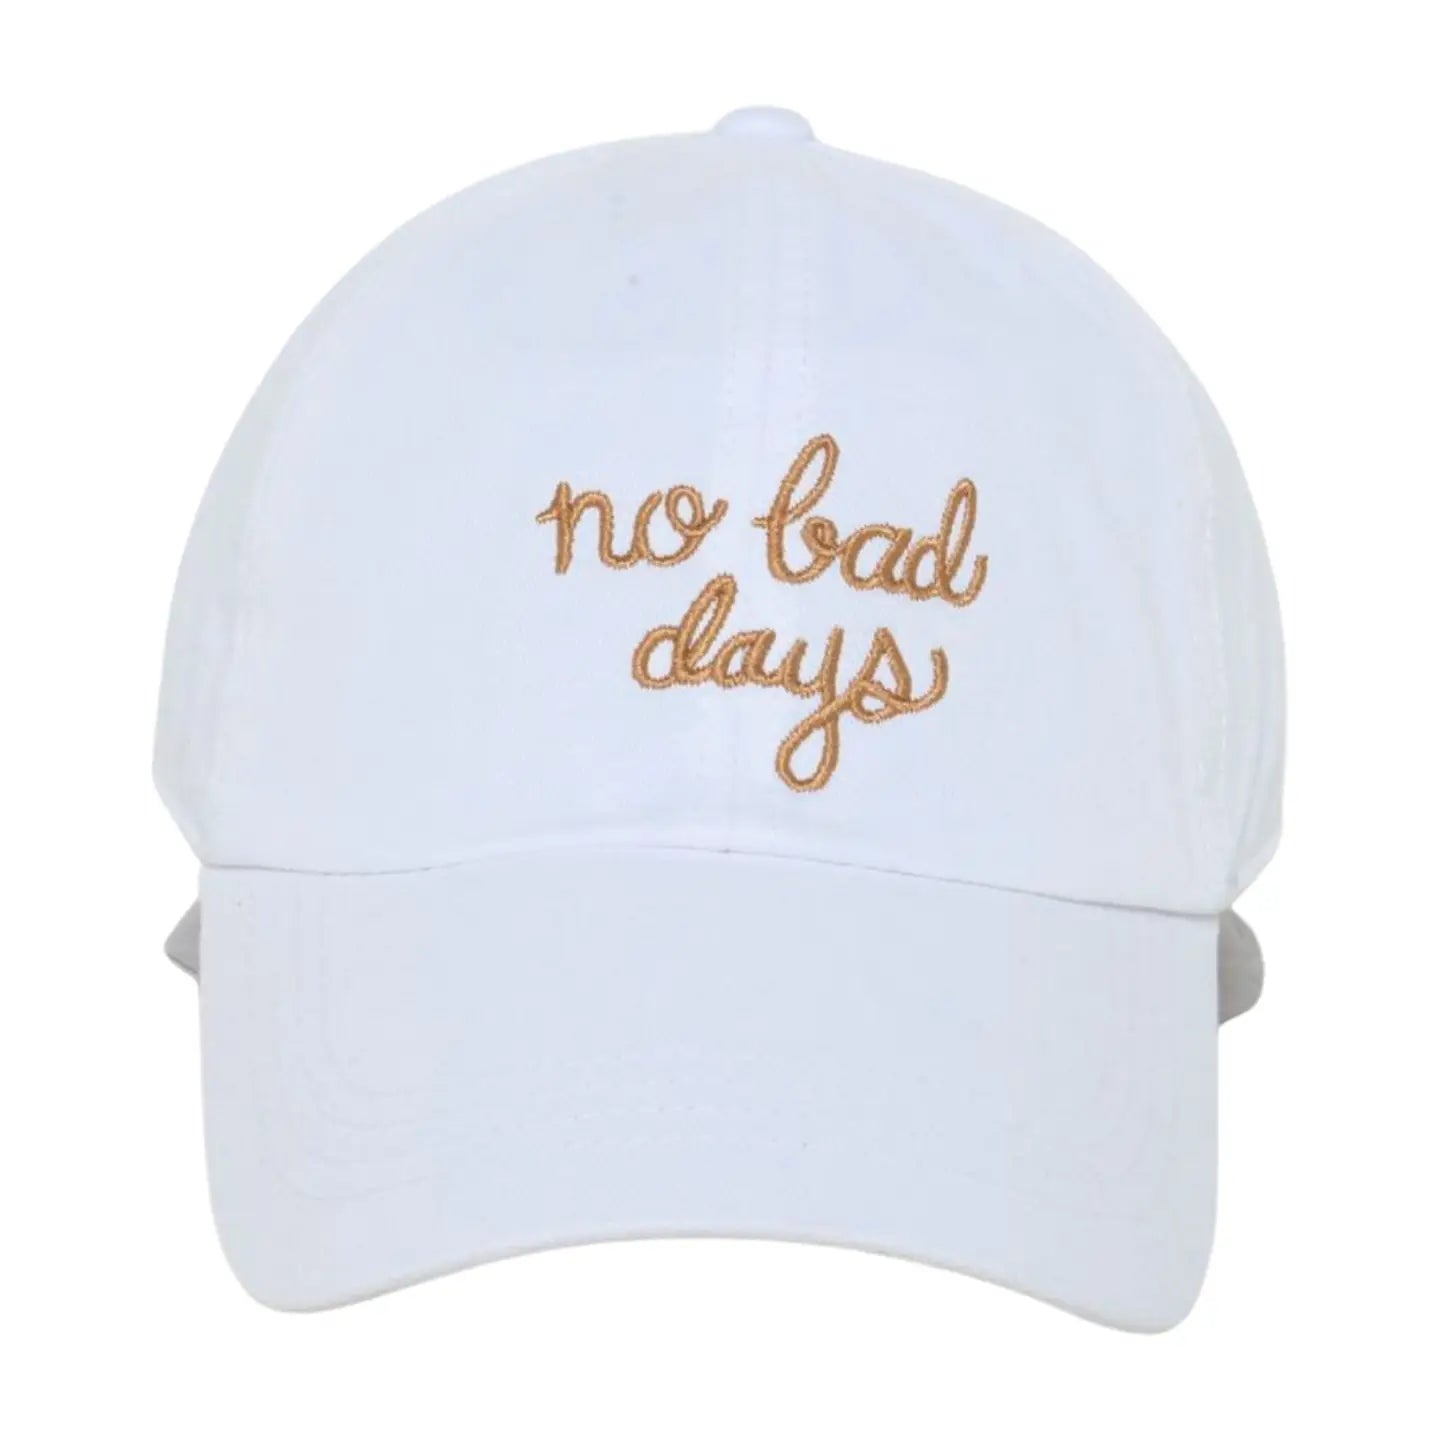 "No Bad Days" Embroidered Baseball Cap